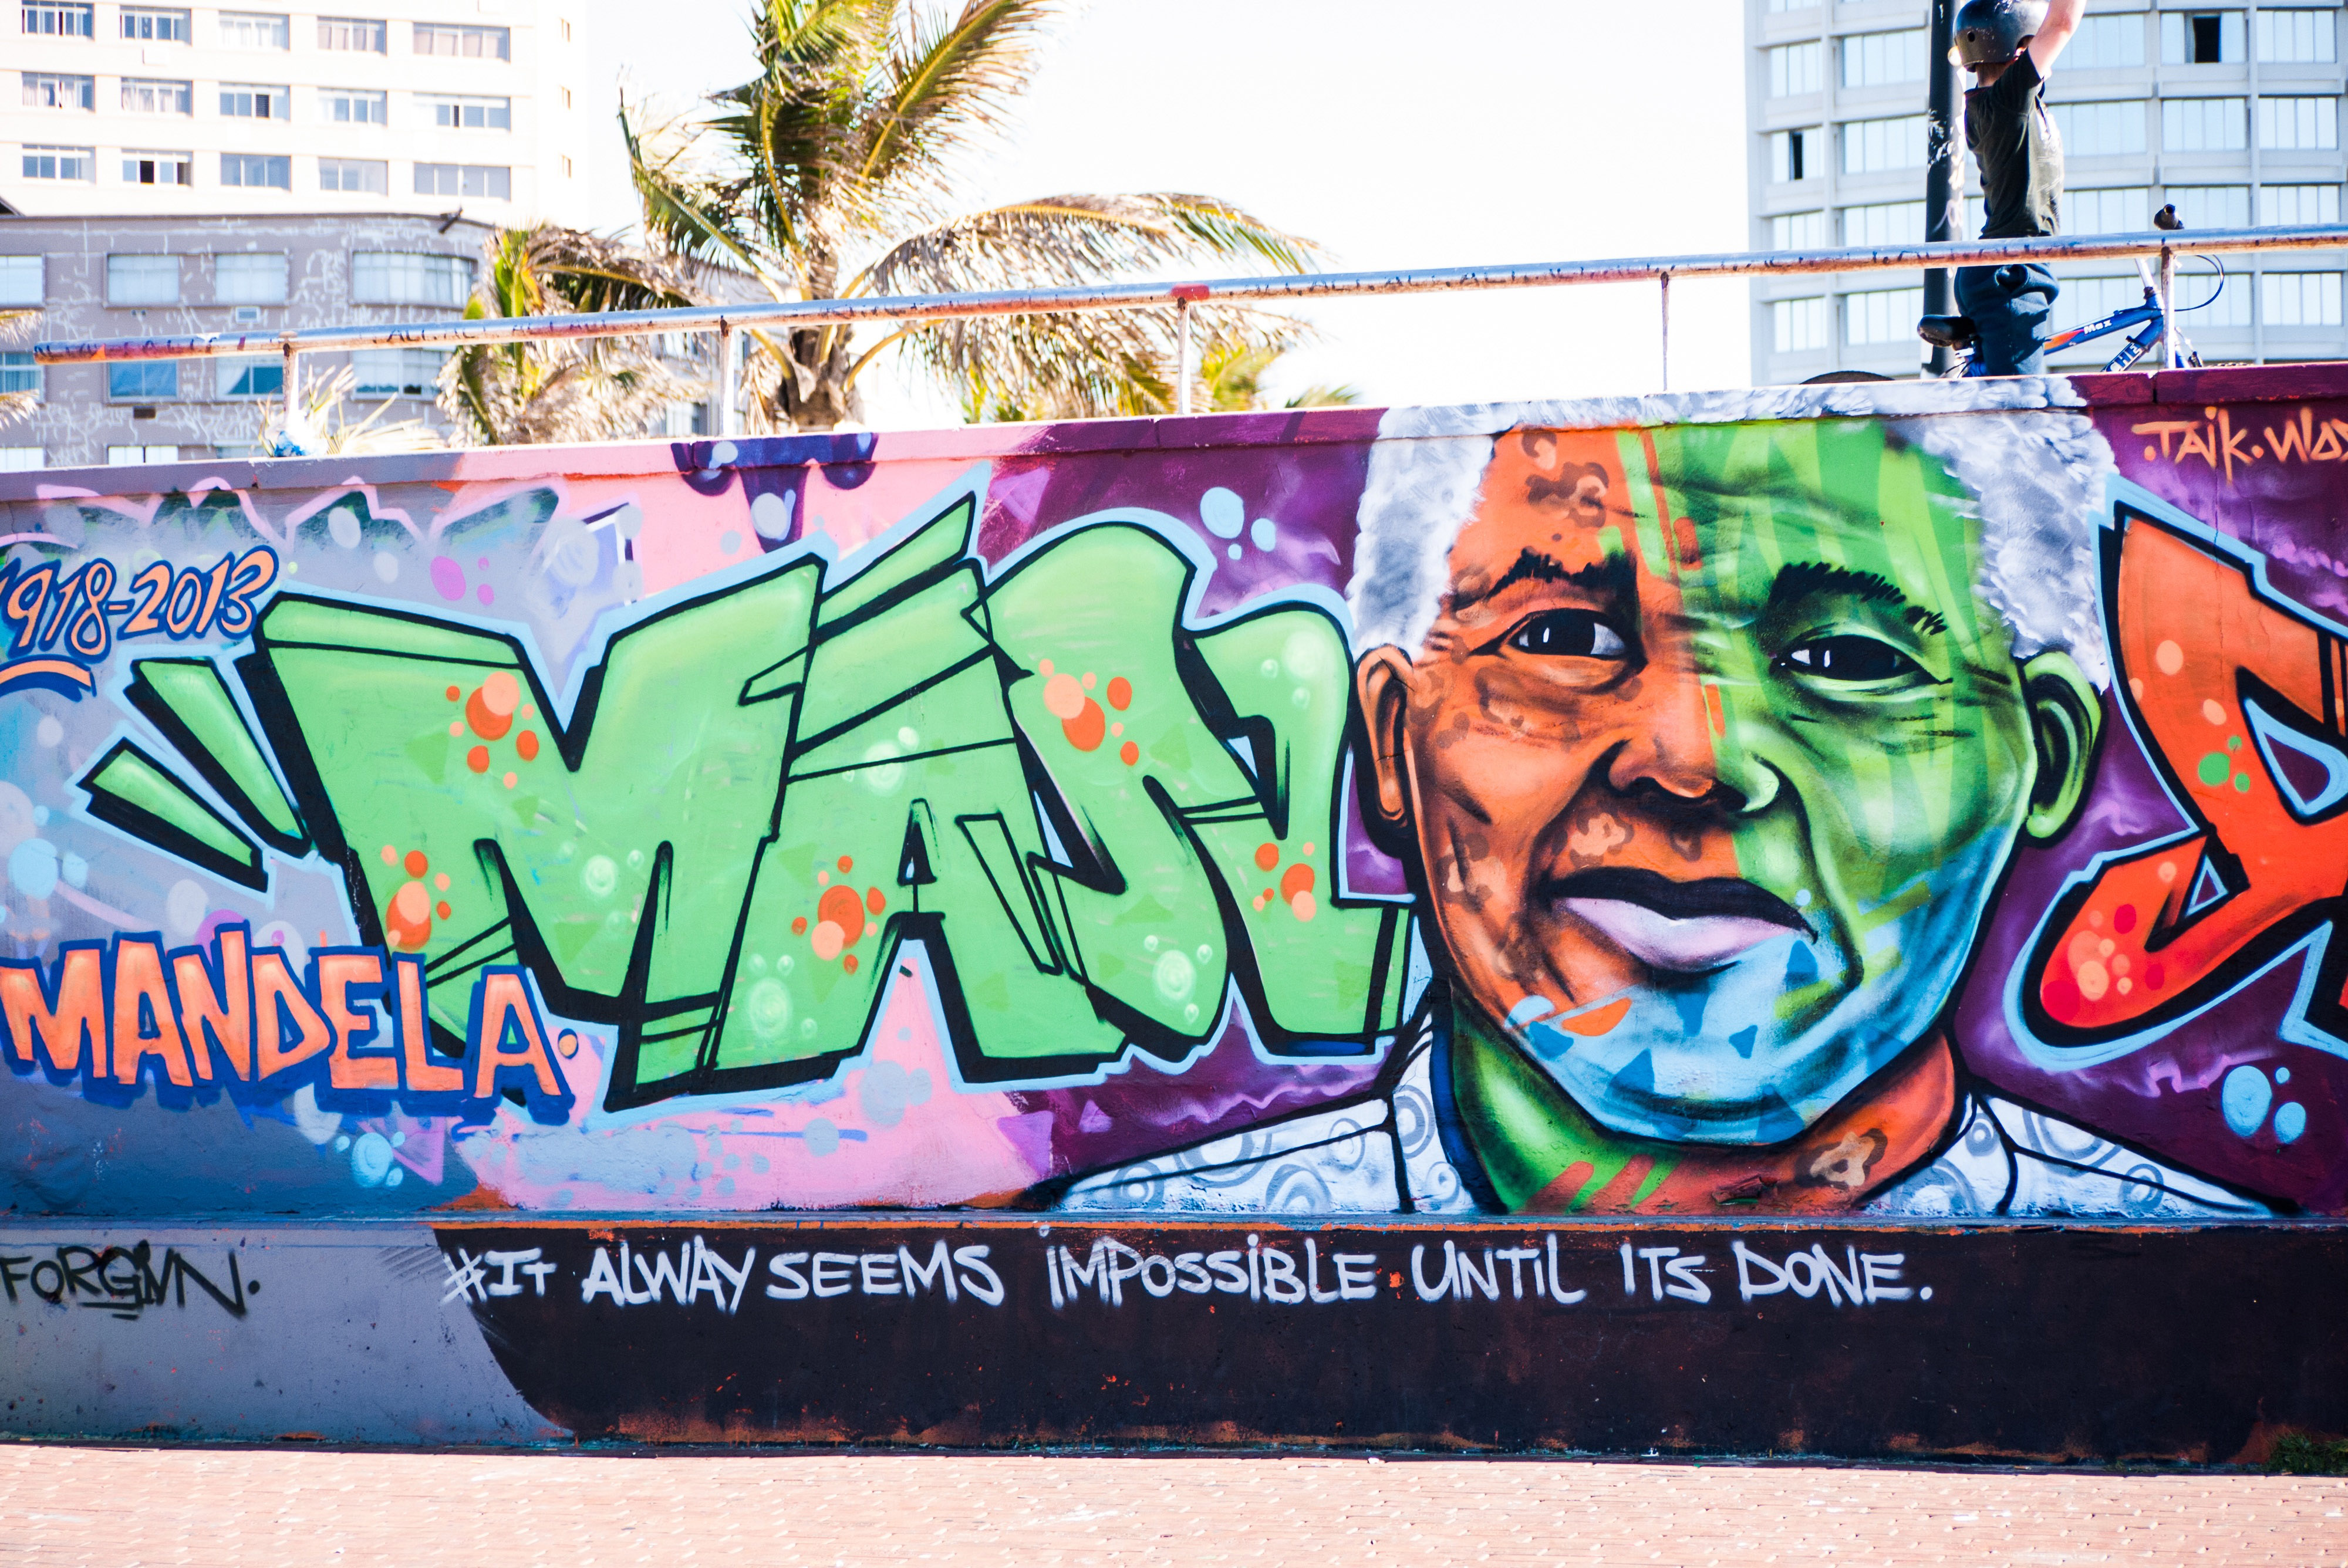 Nelson Mandela Graffiti on wall image - Free stock photo - Public ...